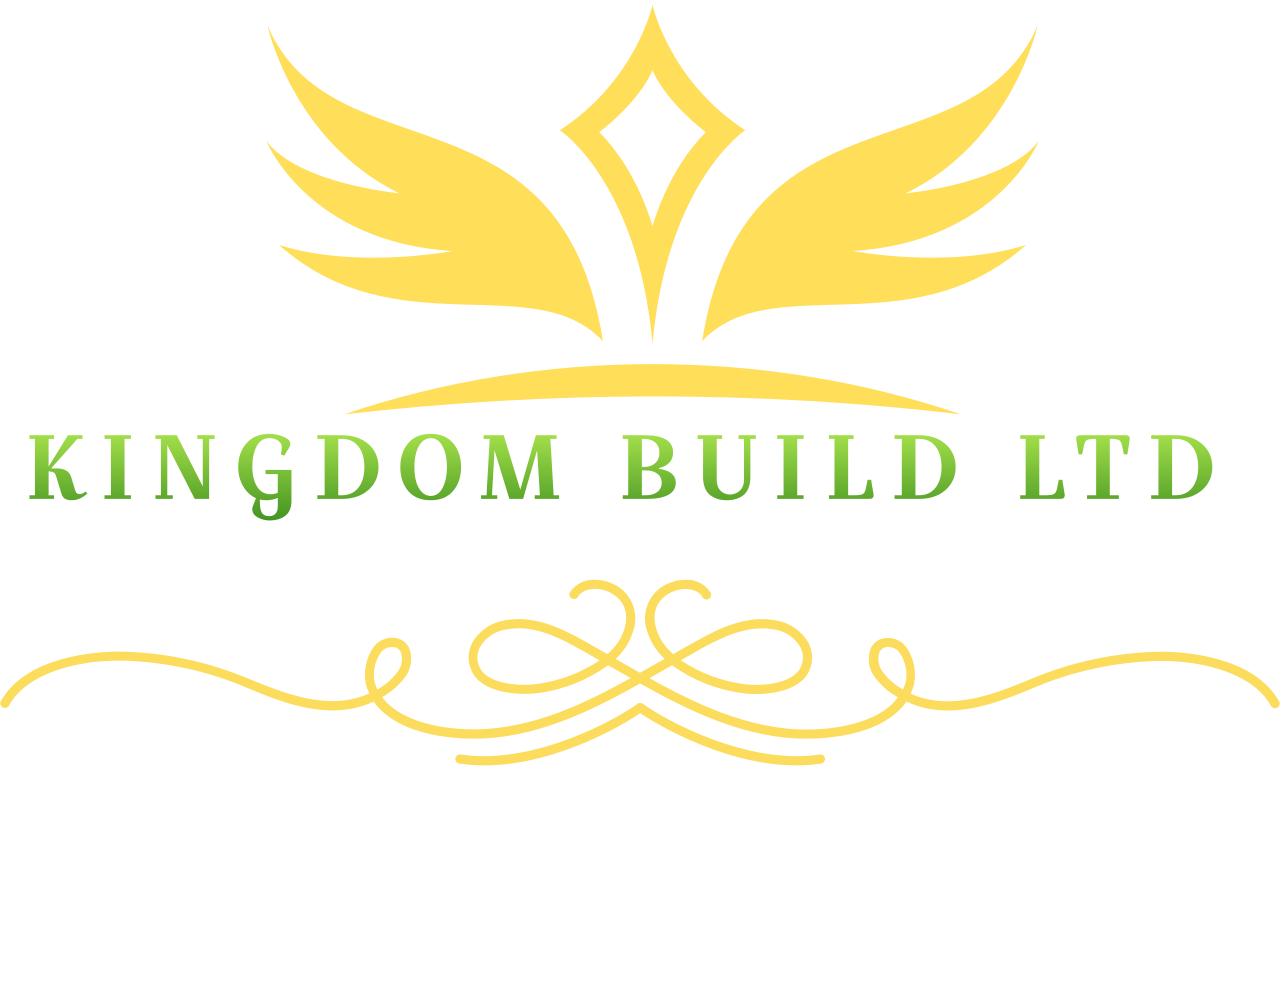 KINGDOM BUILD LTD 's web page